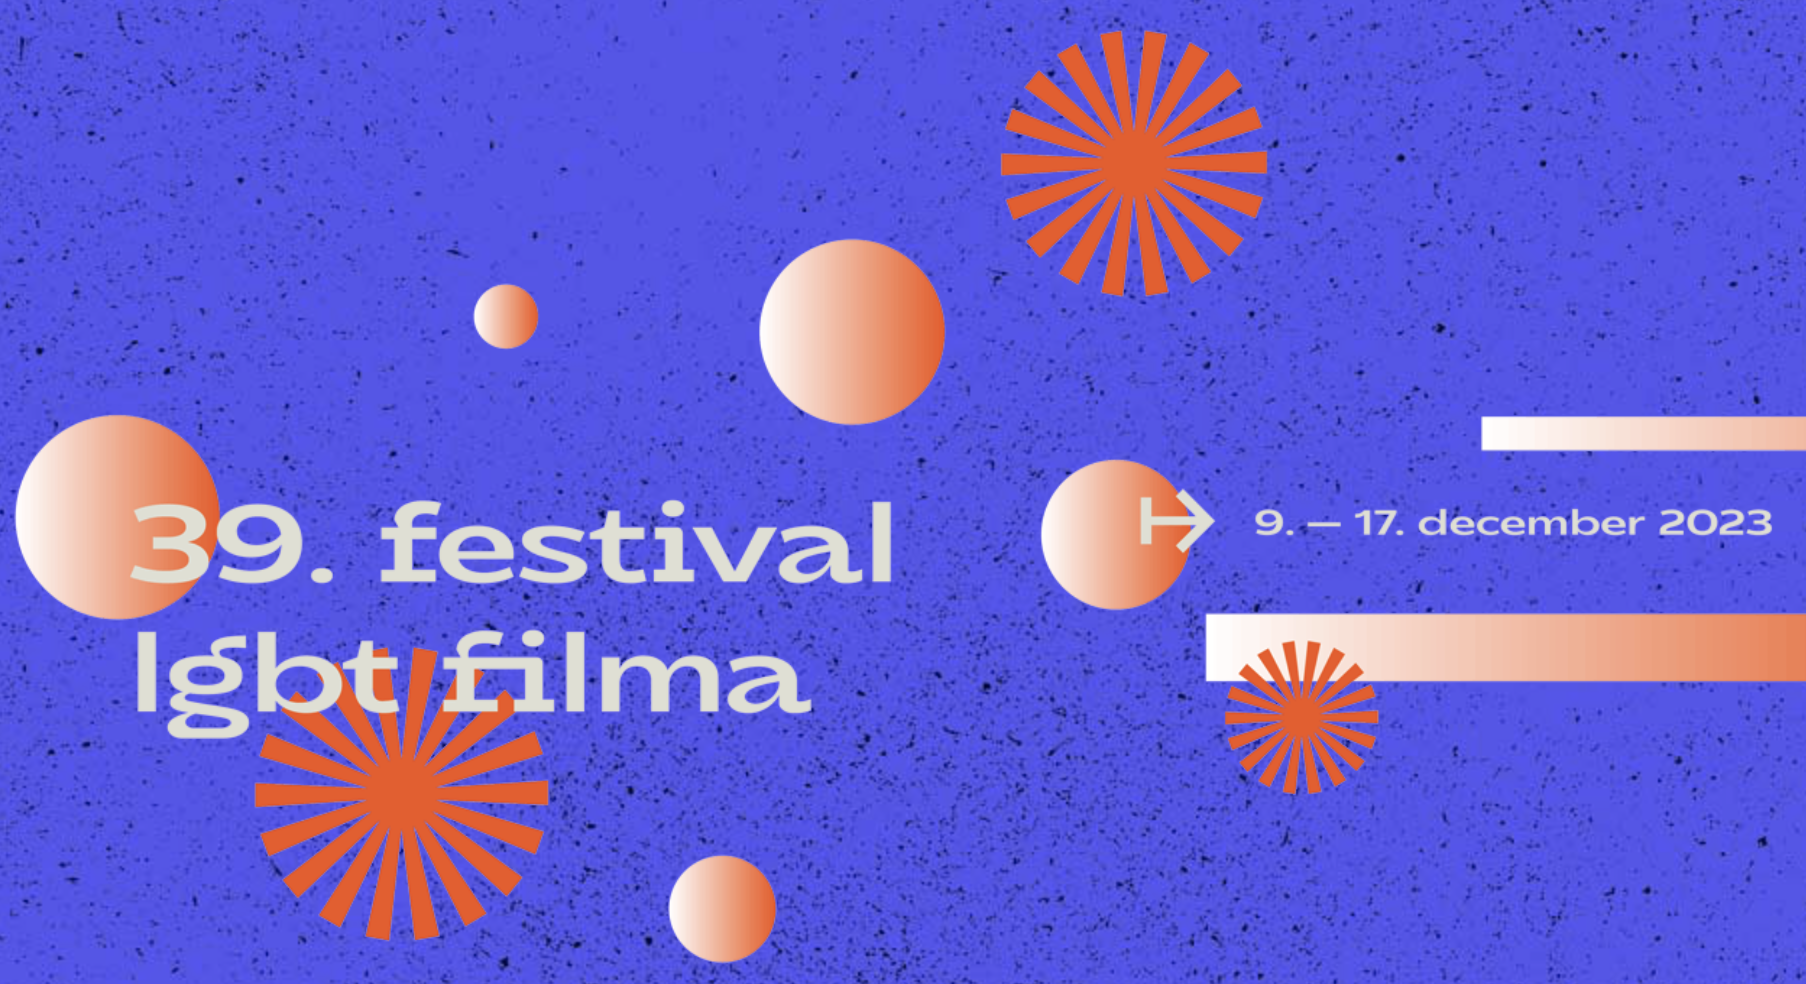 Festival LGTB filma